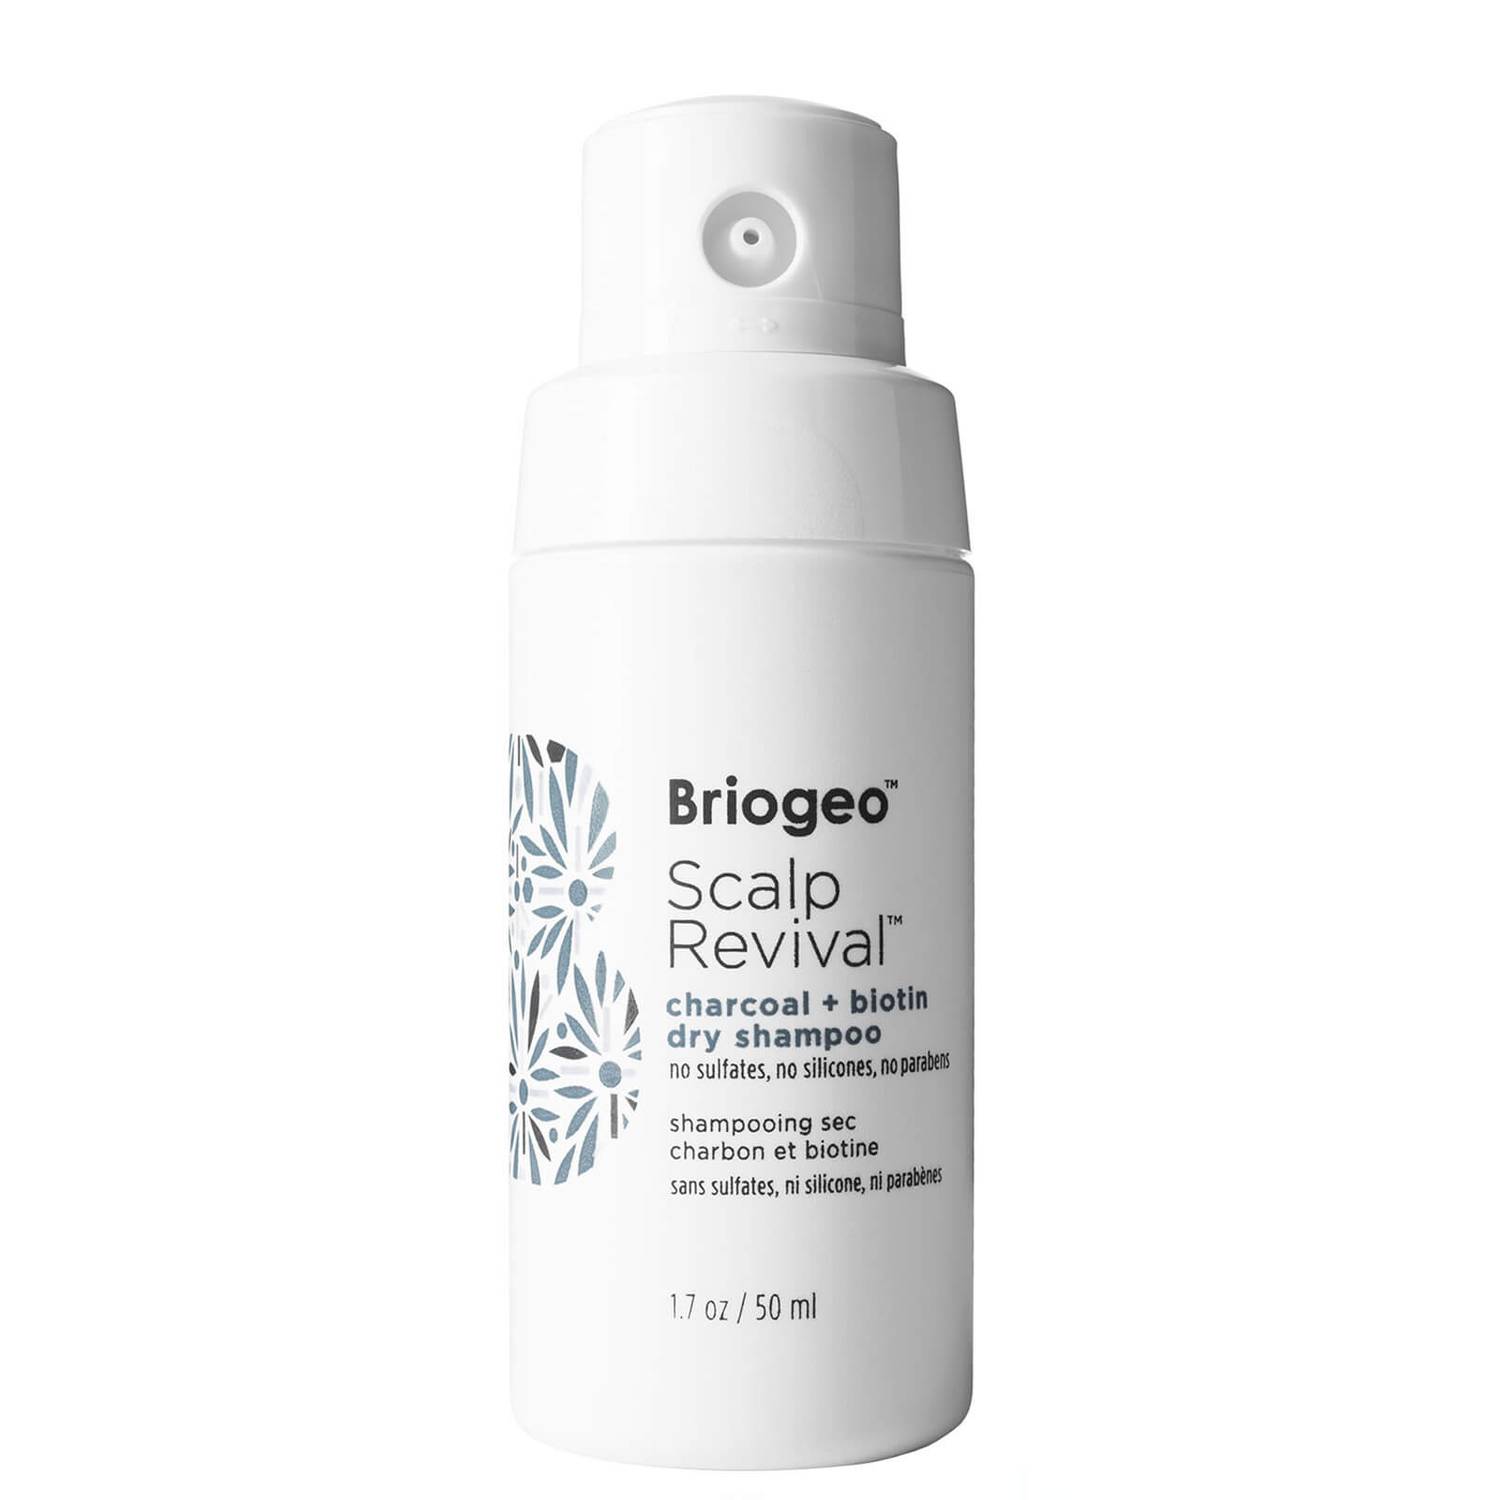 Briogeo Scalp Revival Charcoal and Biotin Dry Shampoo